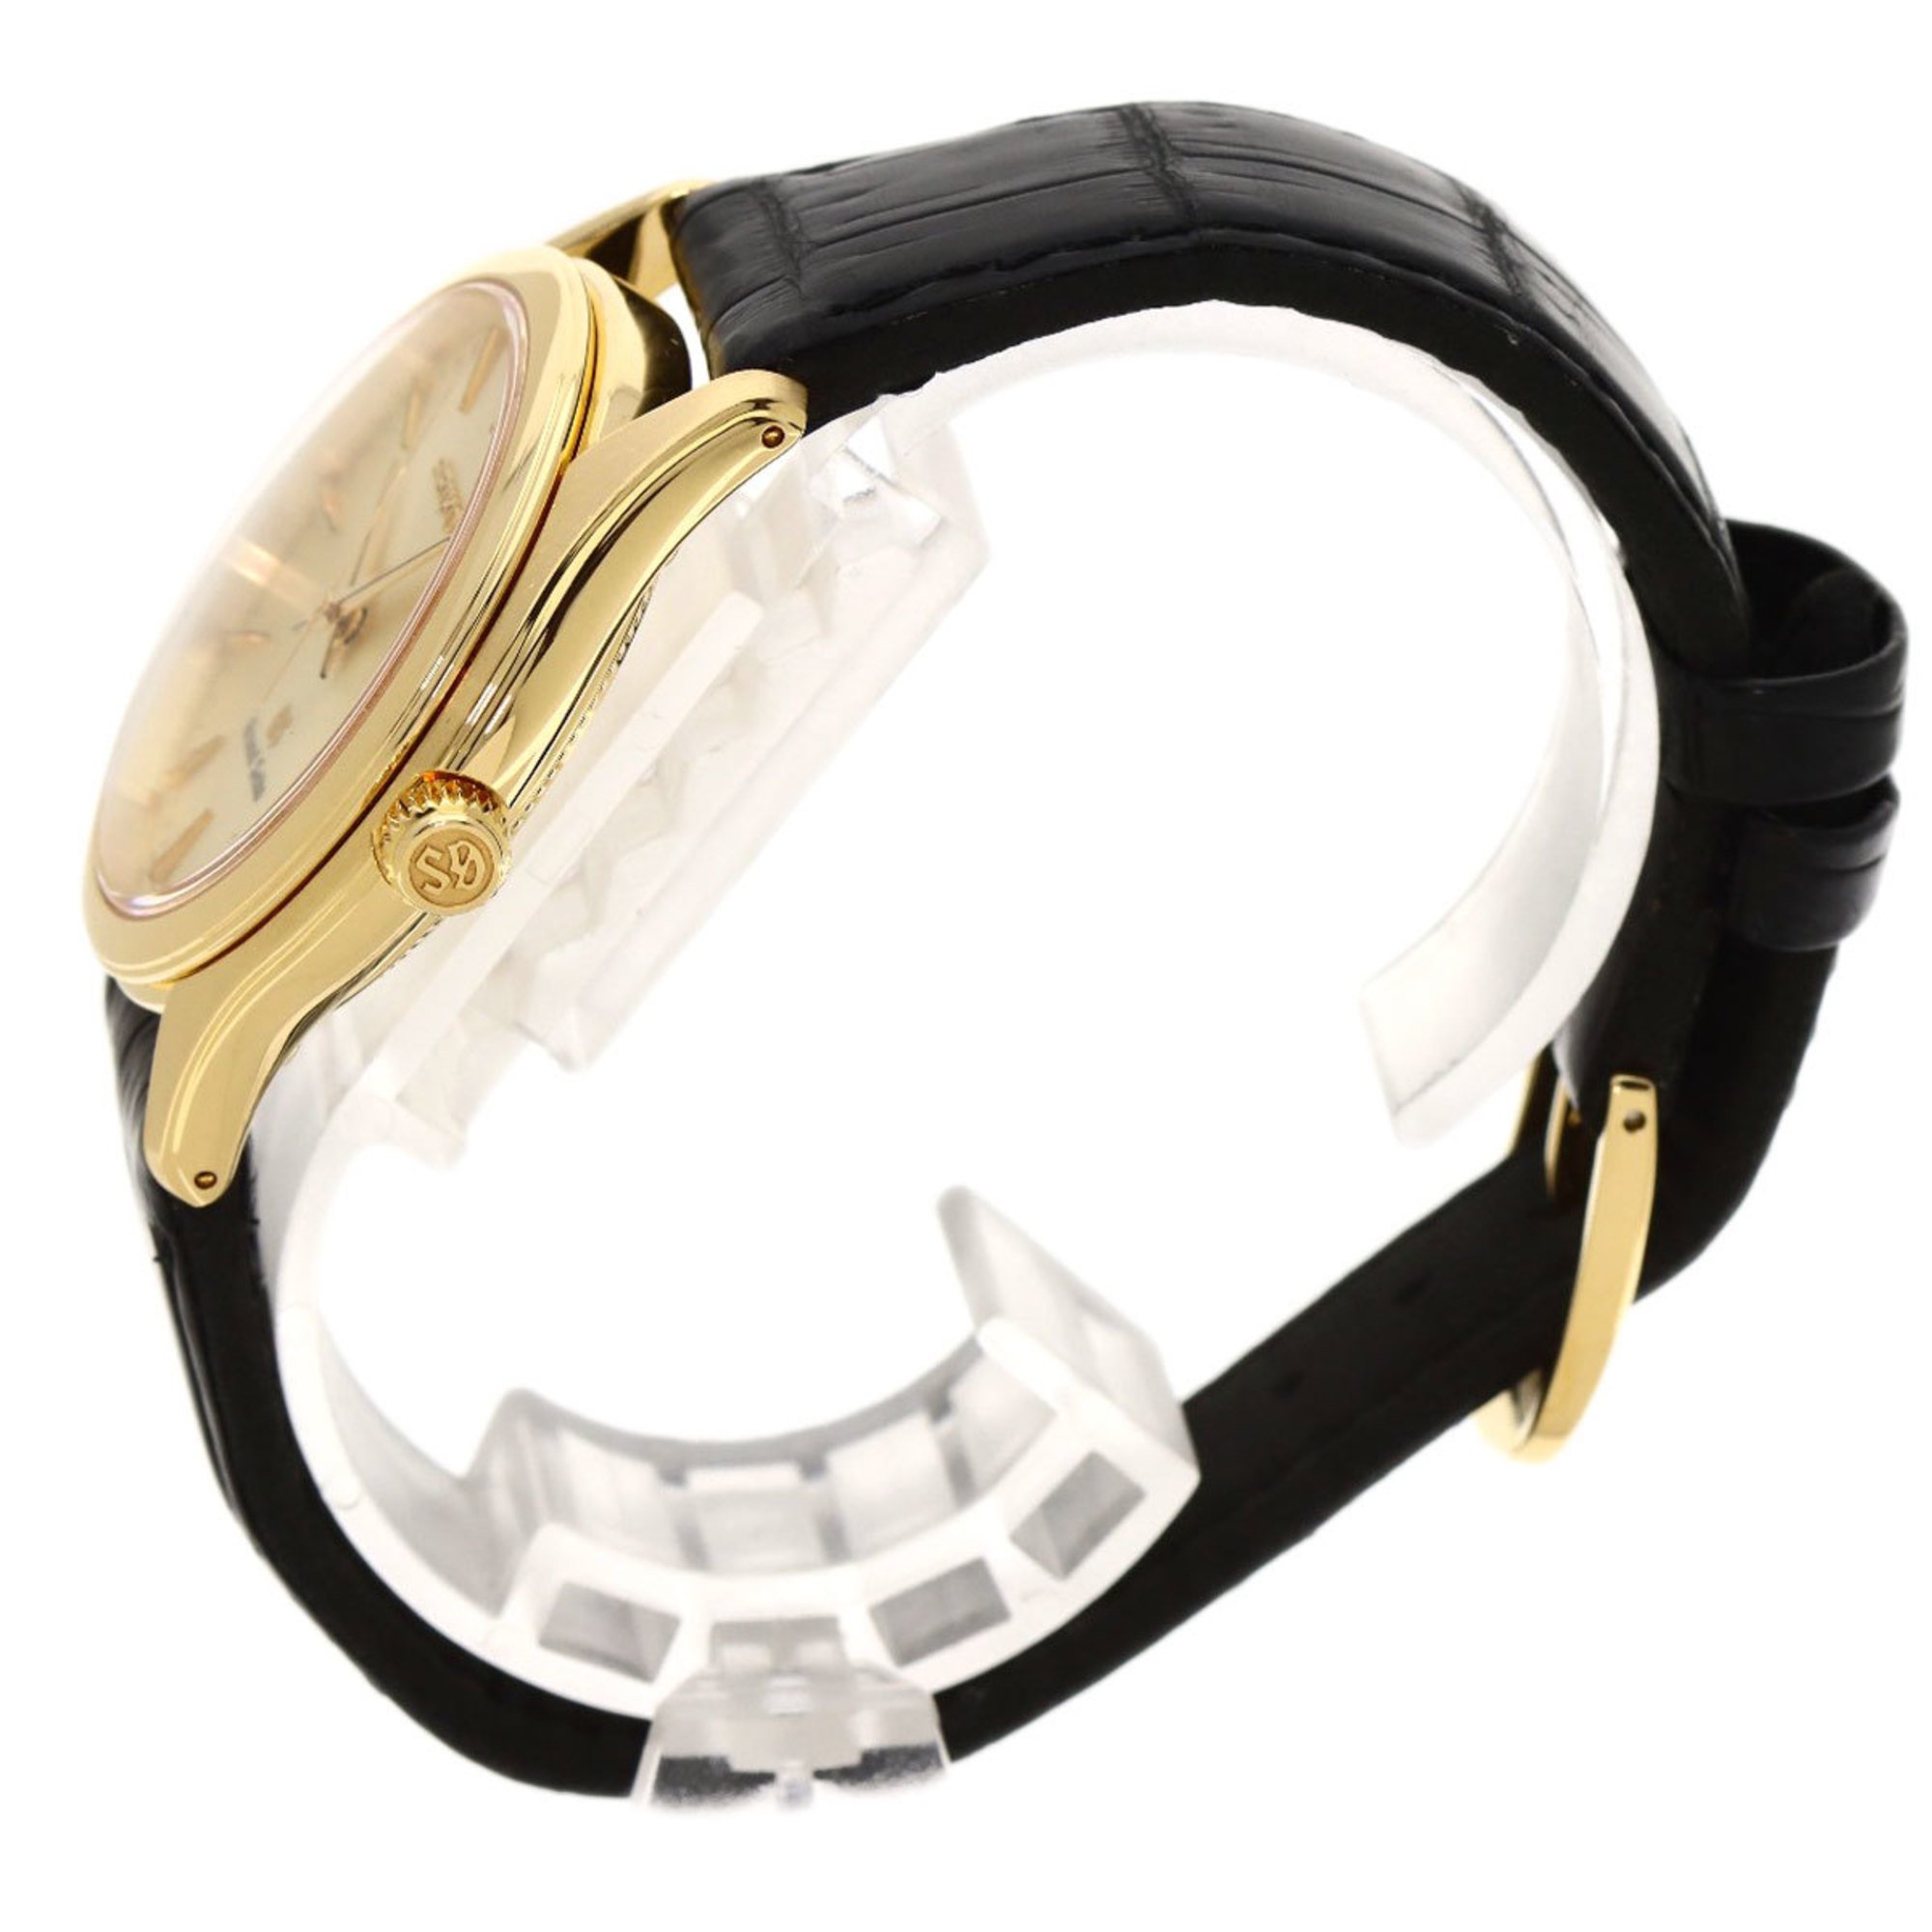 Seiko SBGX038 9F61-0A30 Grand Watch K18 Yellow Gold Leather Men's